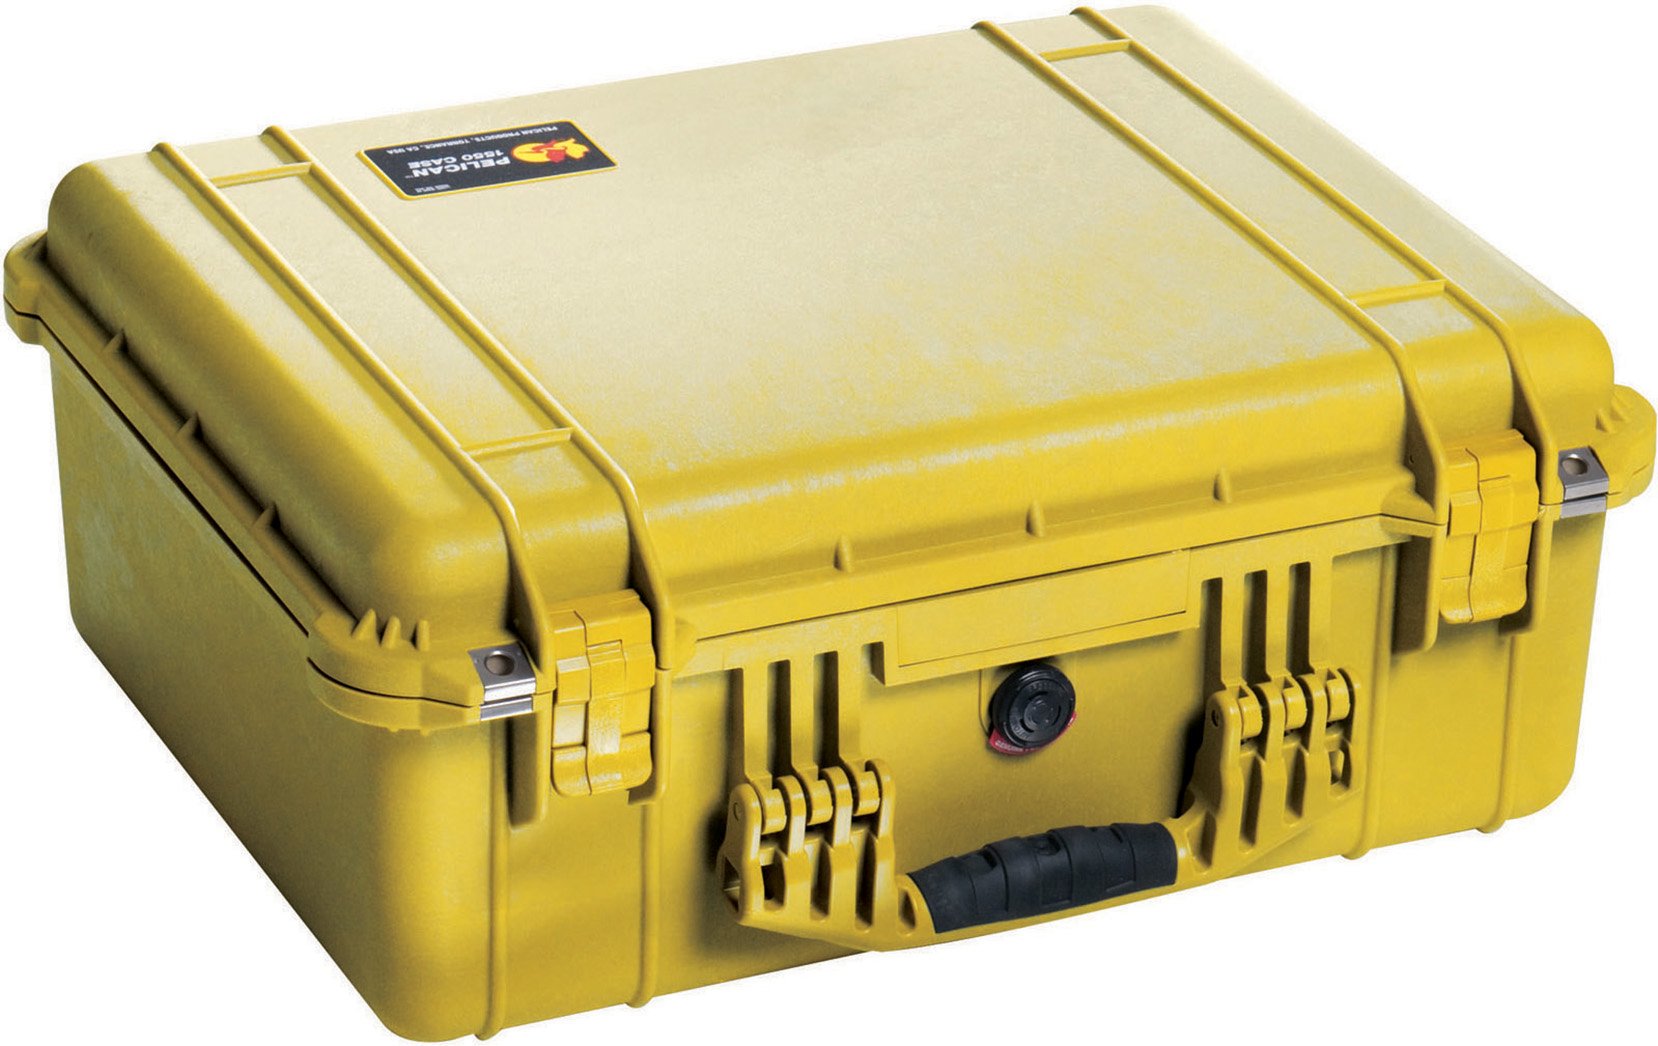 Pelican 1550 Camera Case With Foam (Yellow)